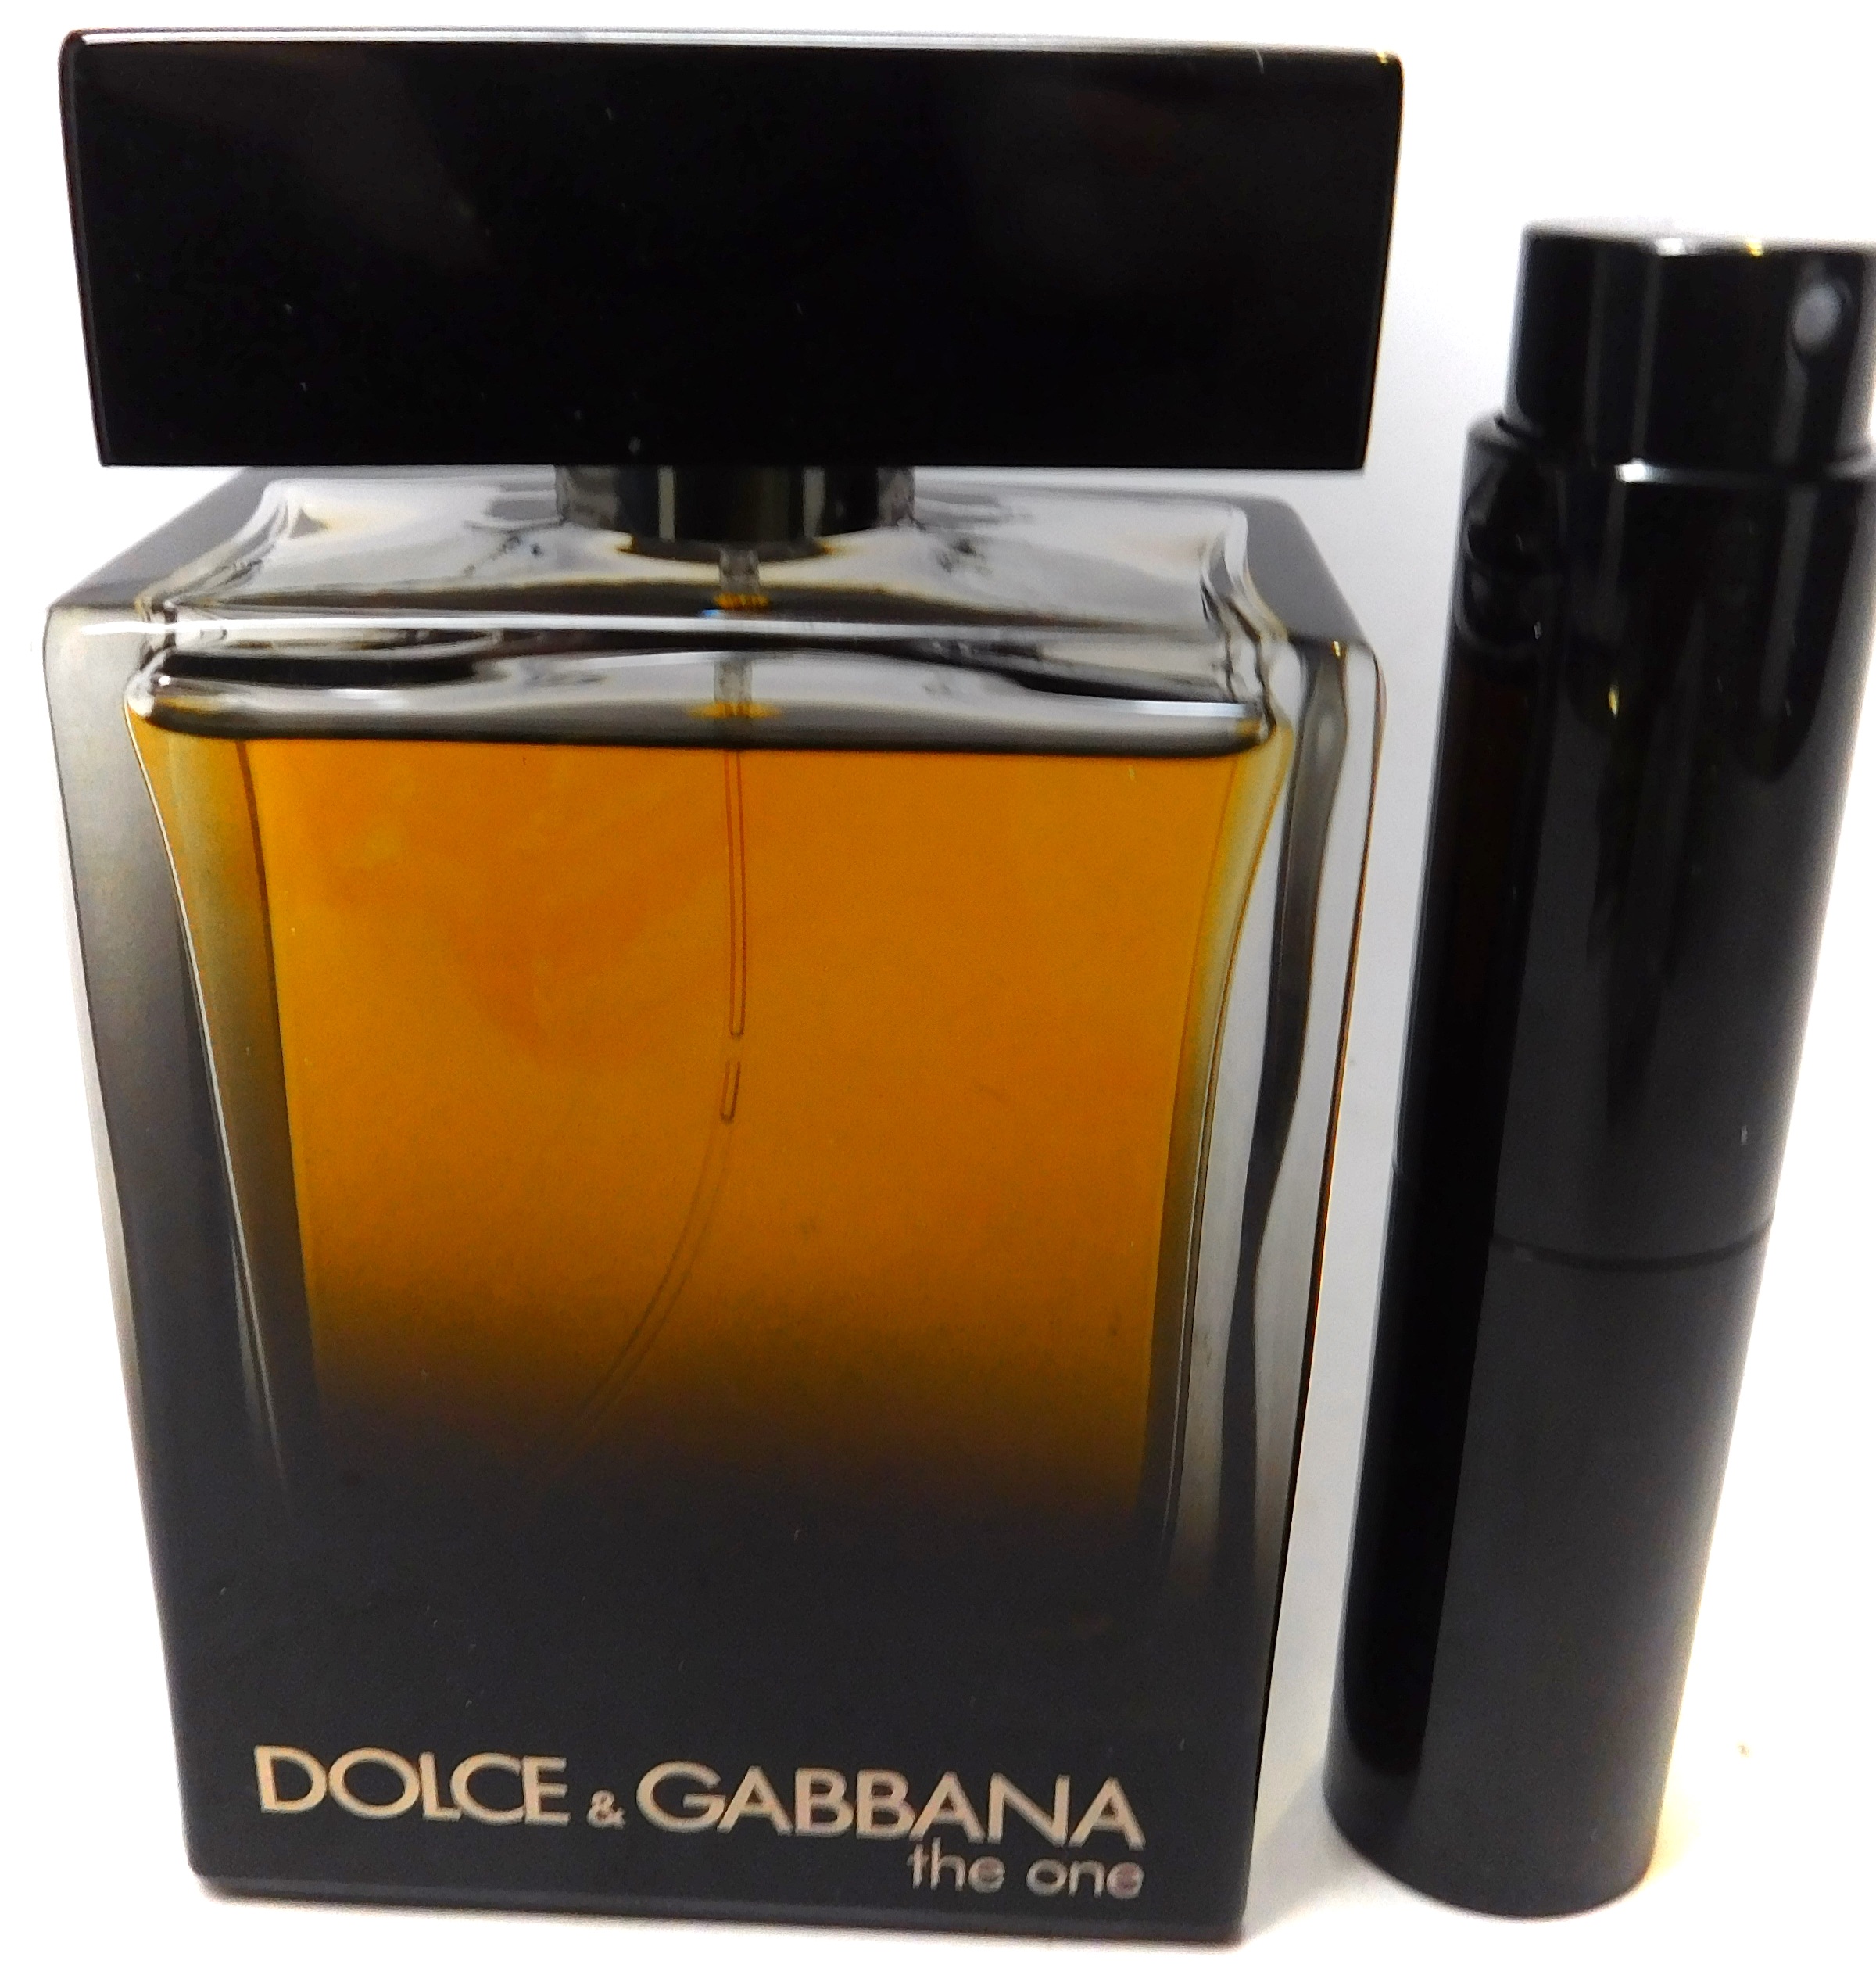 Dolce & Gabbana The One Eau de Parfum 8ml SAMPLE Travel Atomizer